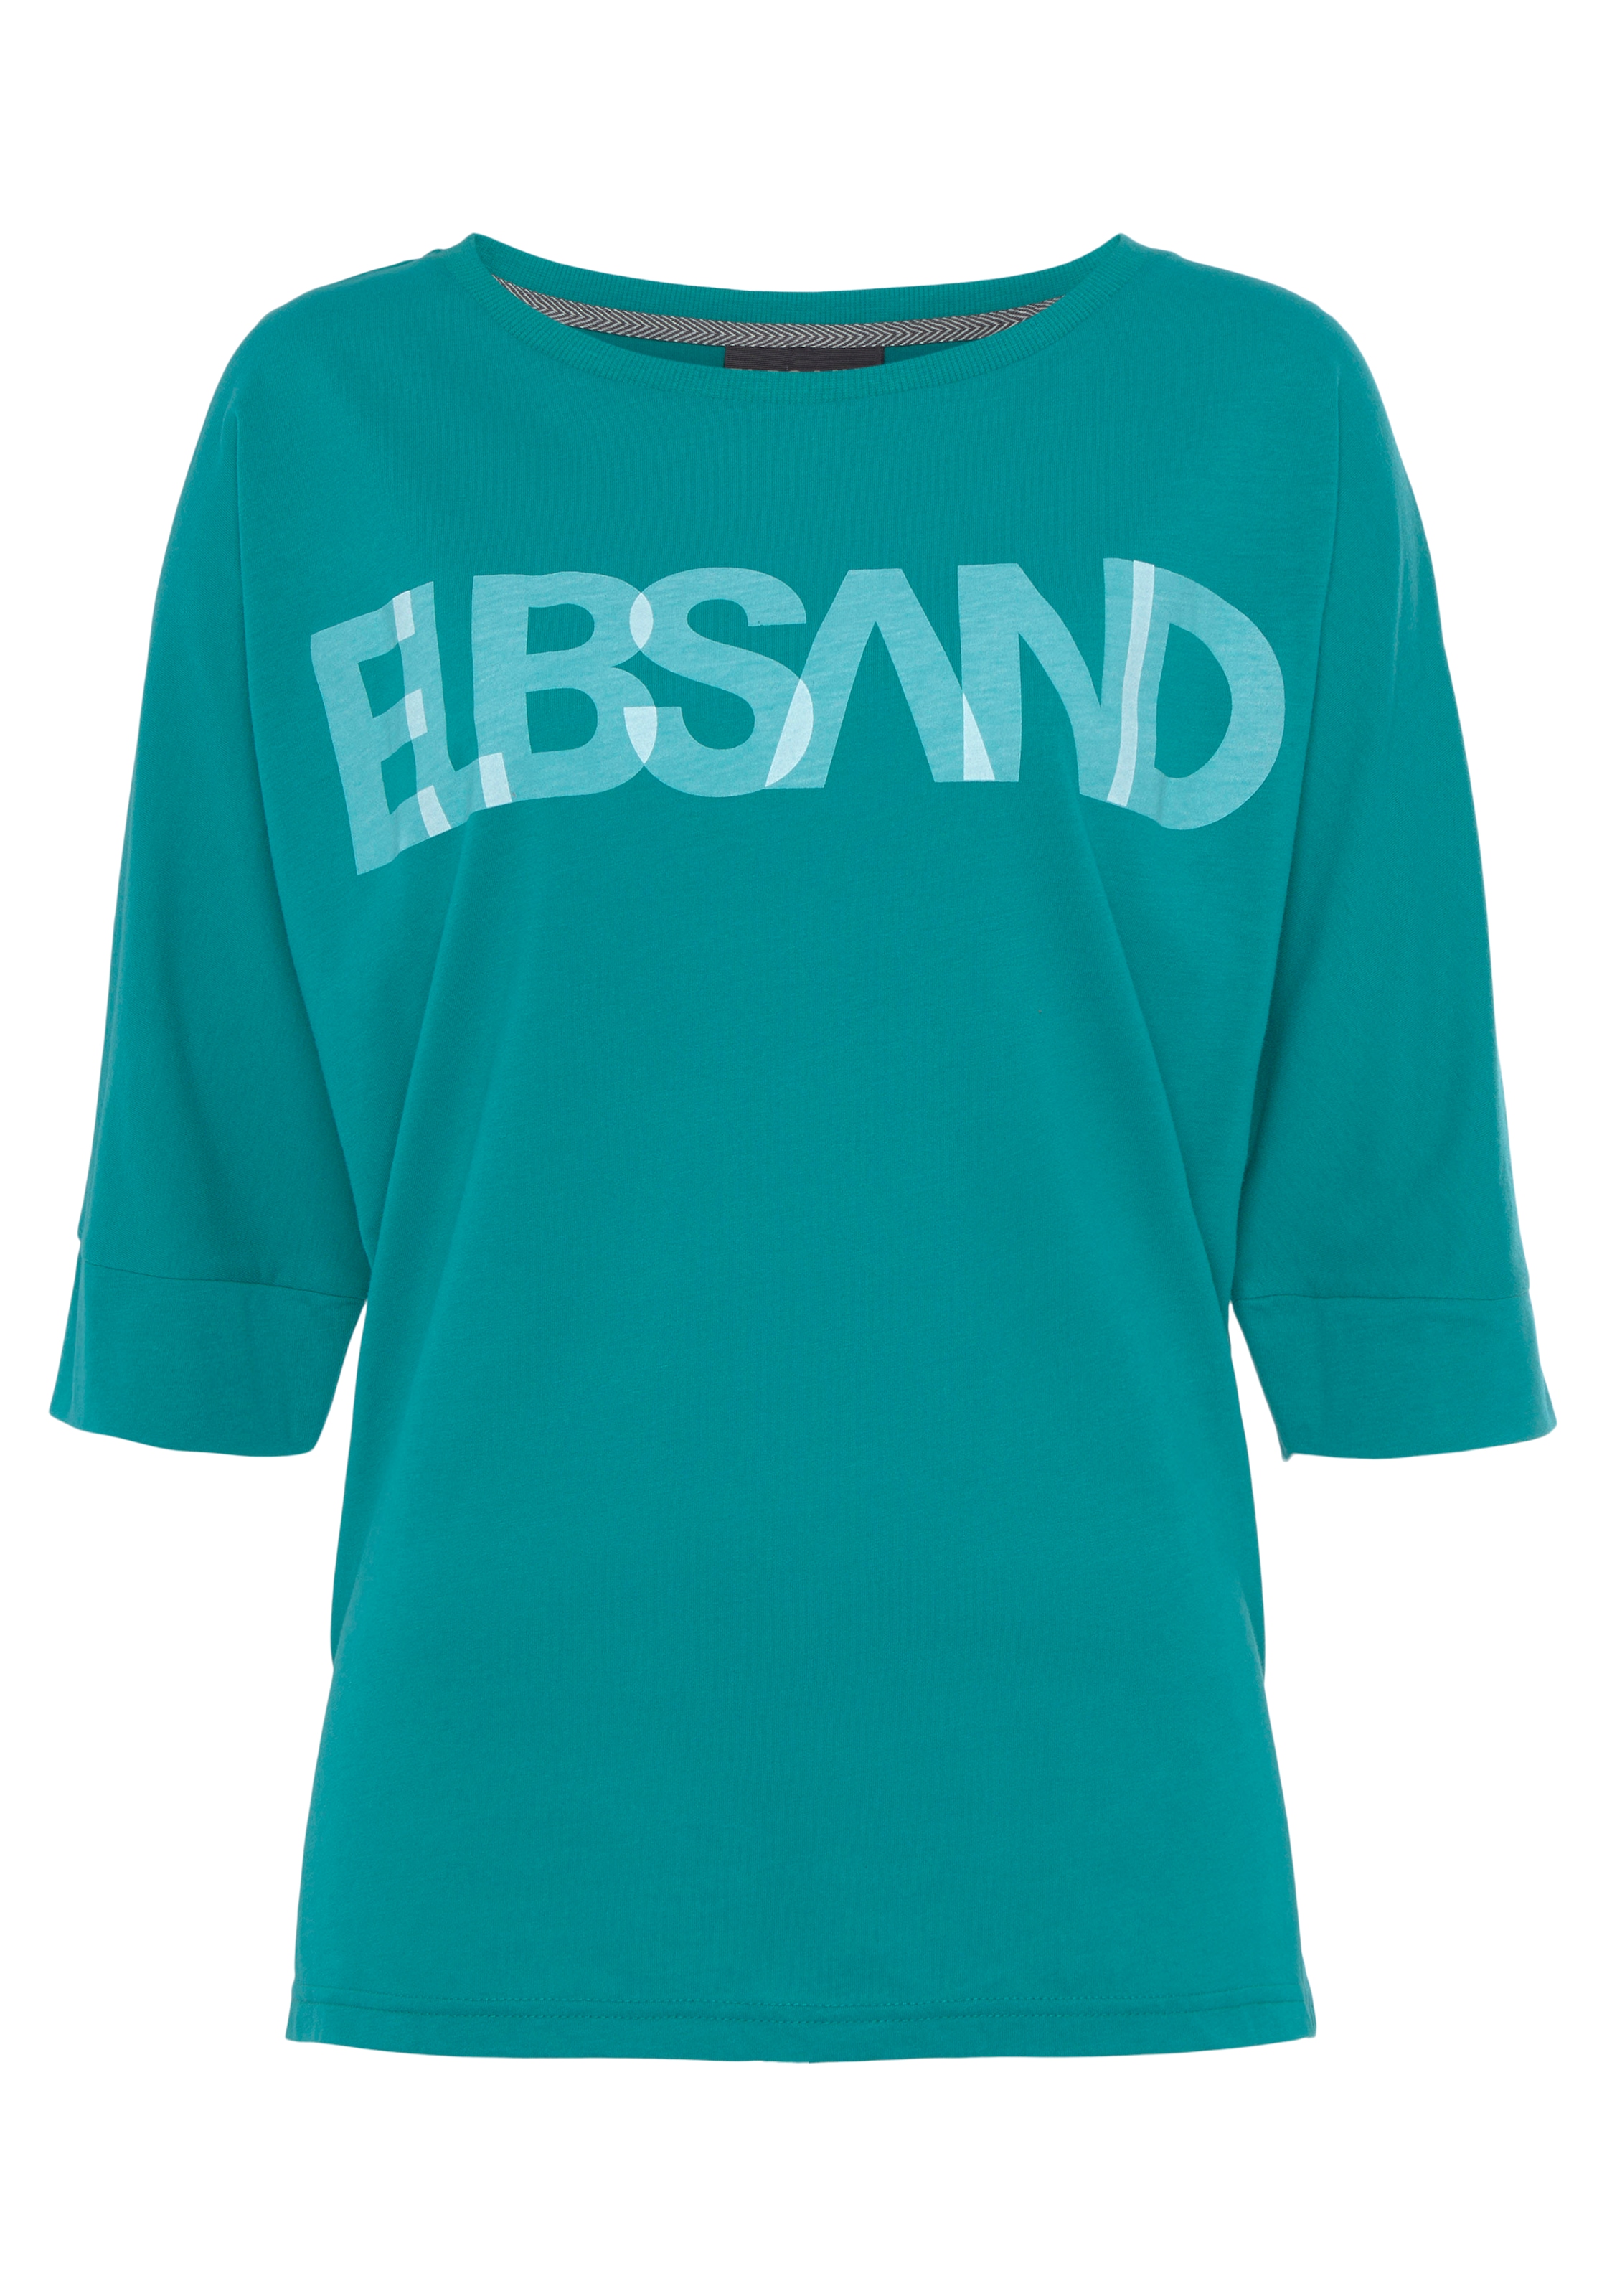 mit Passform Logodruck, Elbsand Baumwoll-Mix, lockere shoppen 3/4-Arm-Shirt,